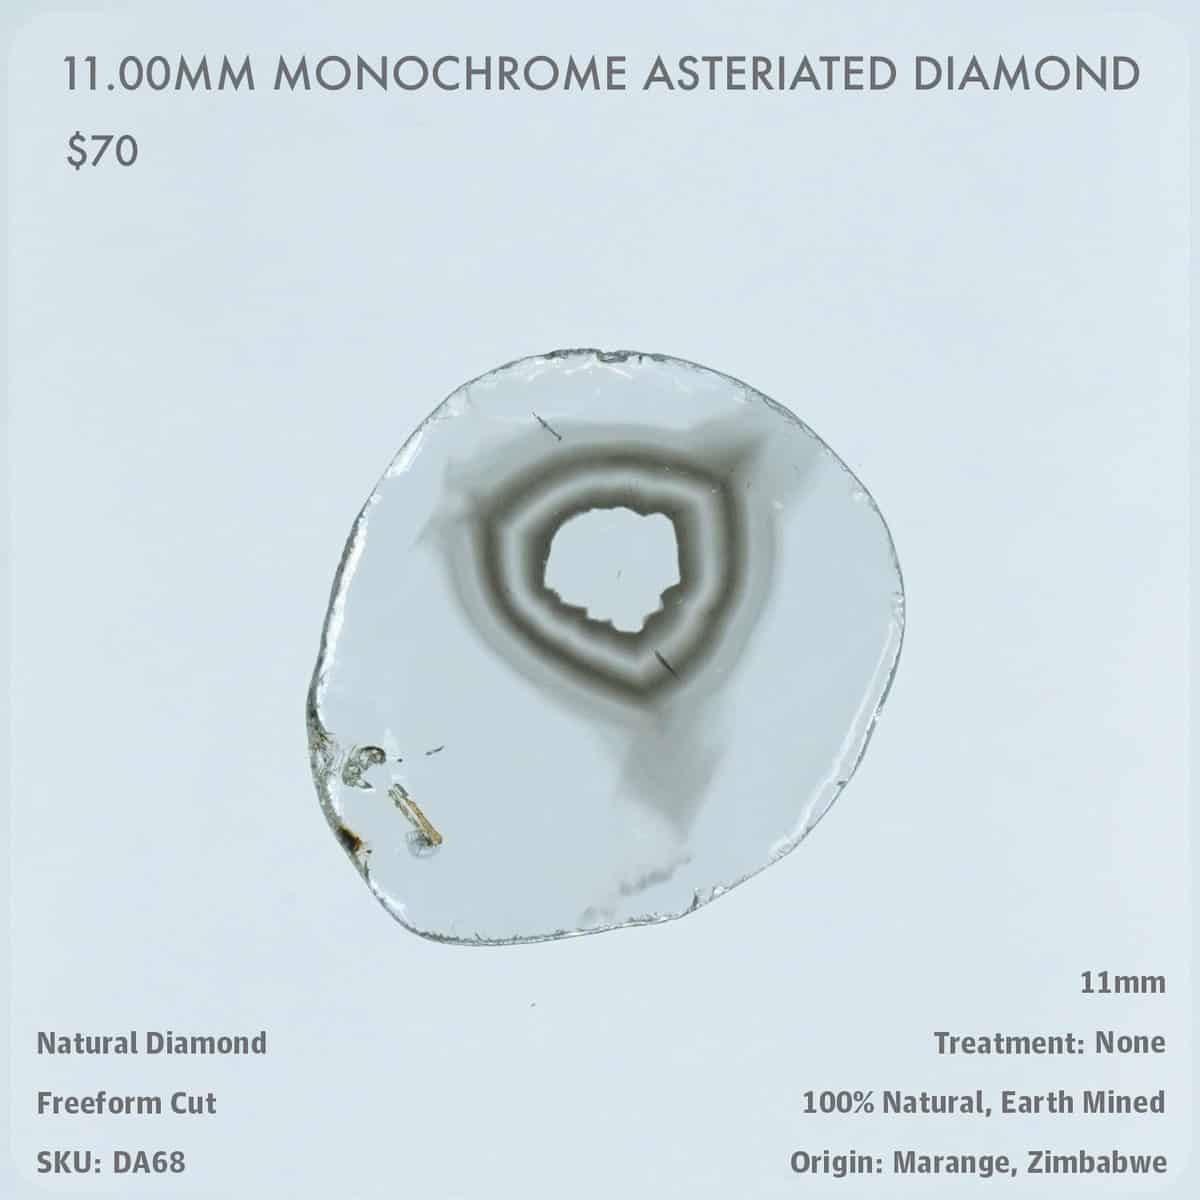 11.00mm Monochrome Asteriated Diamond